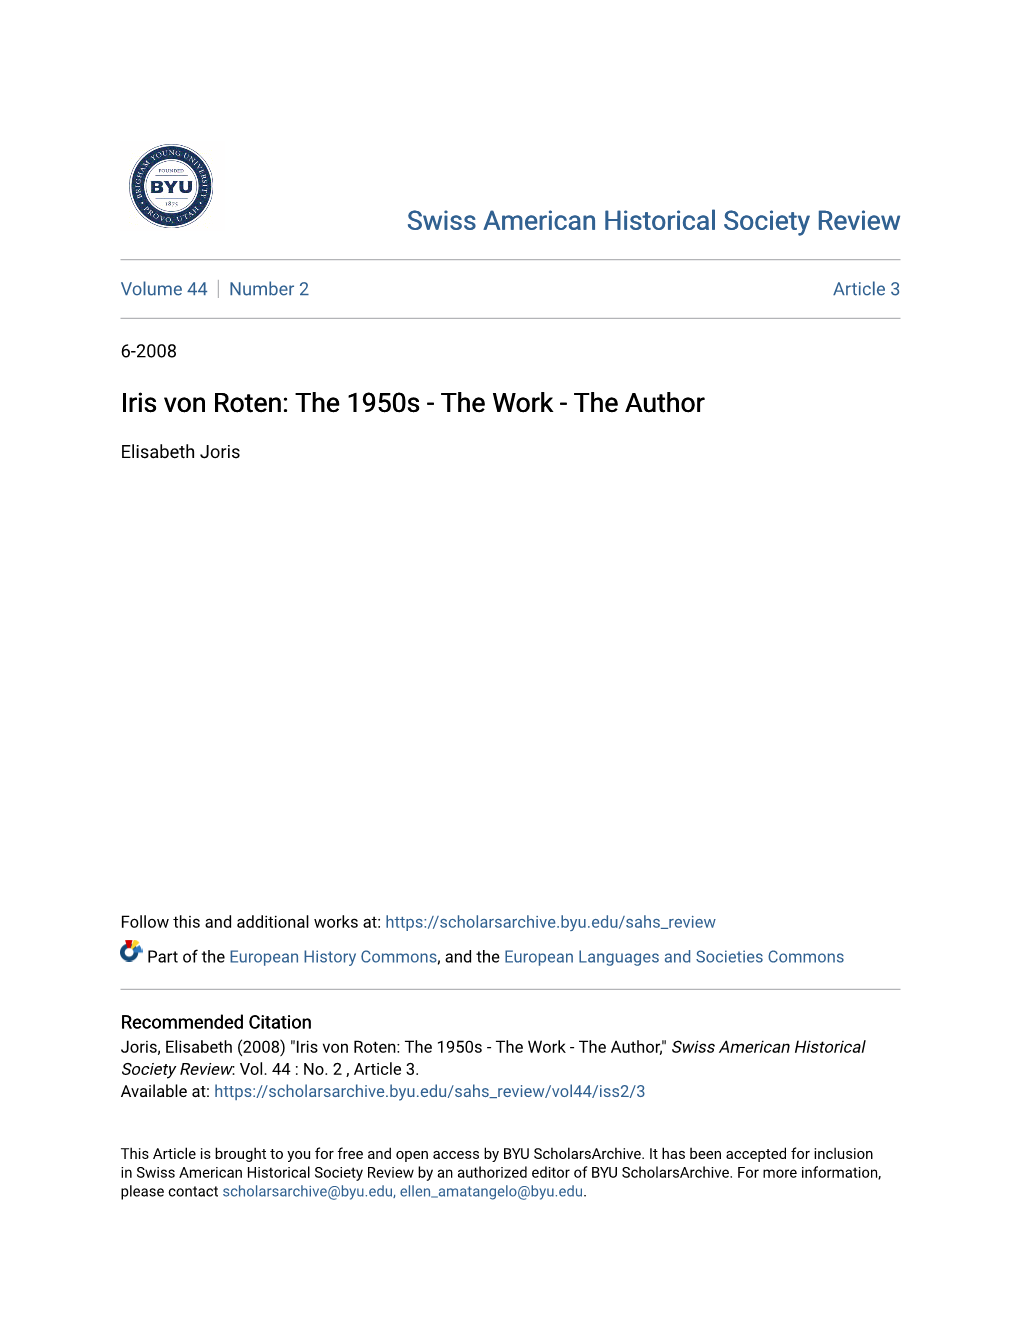 Iris Von Roten: the 1950S - the Work - the Author